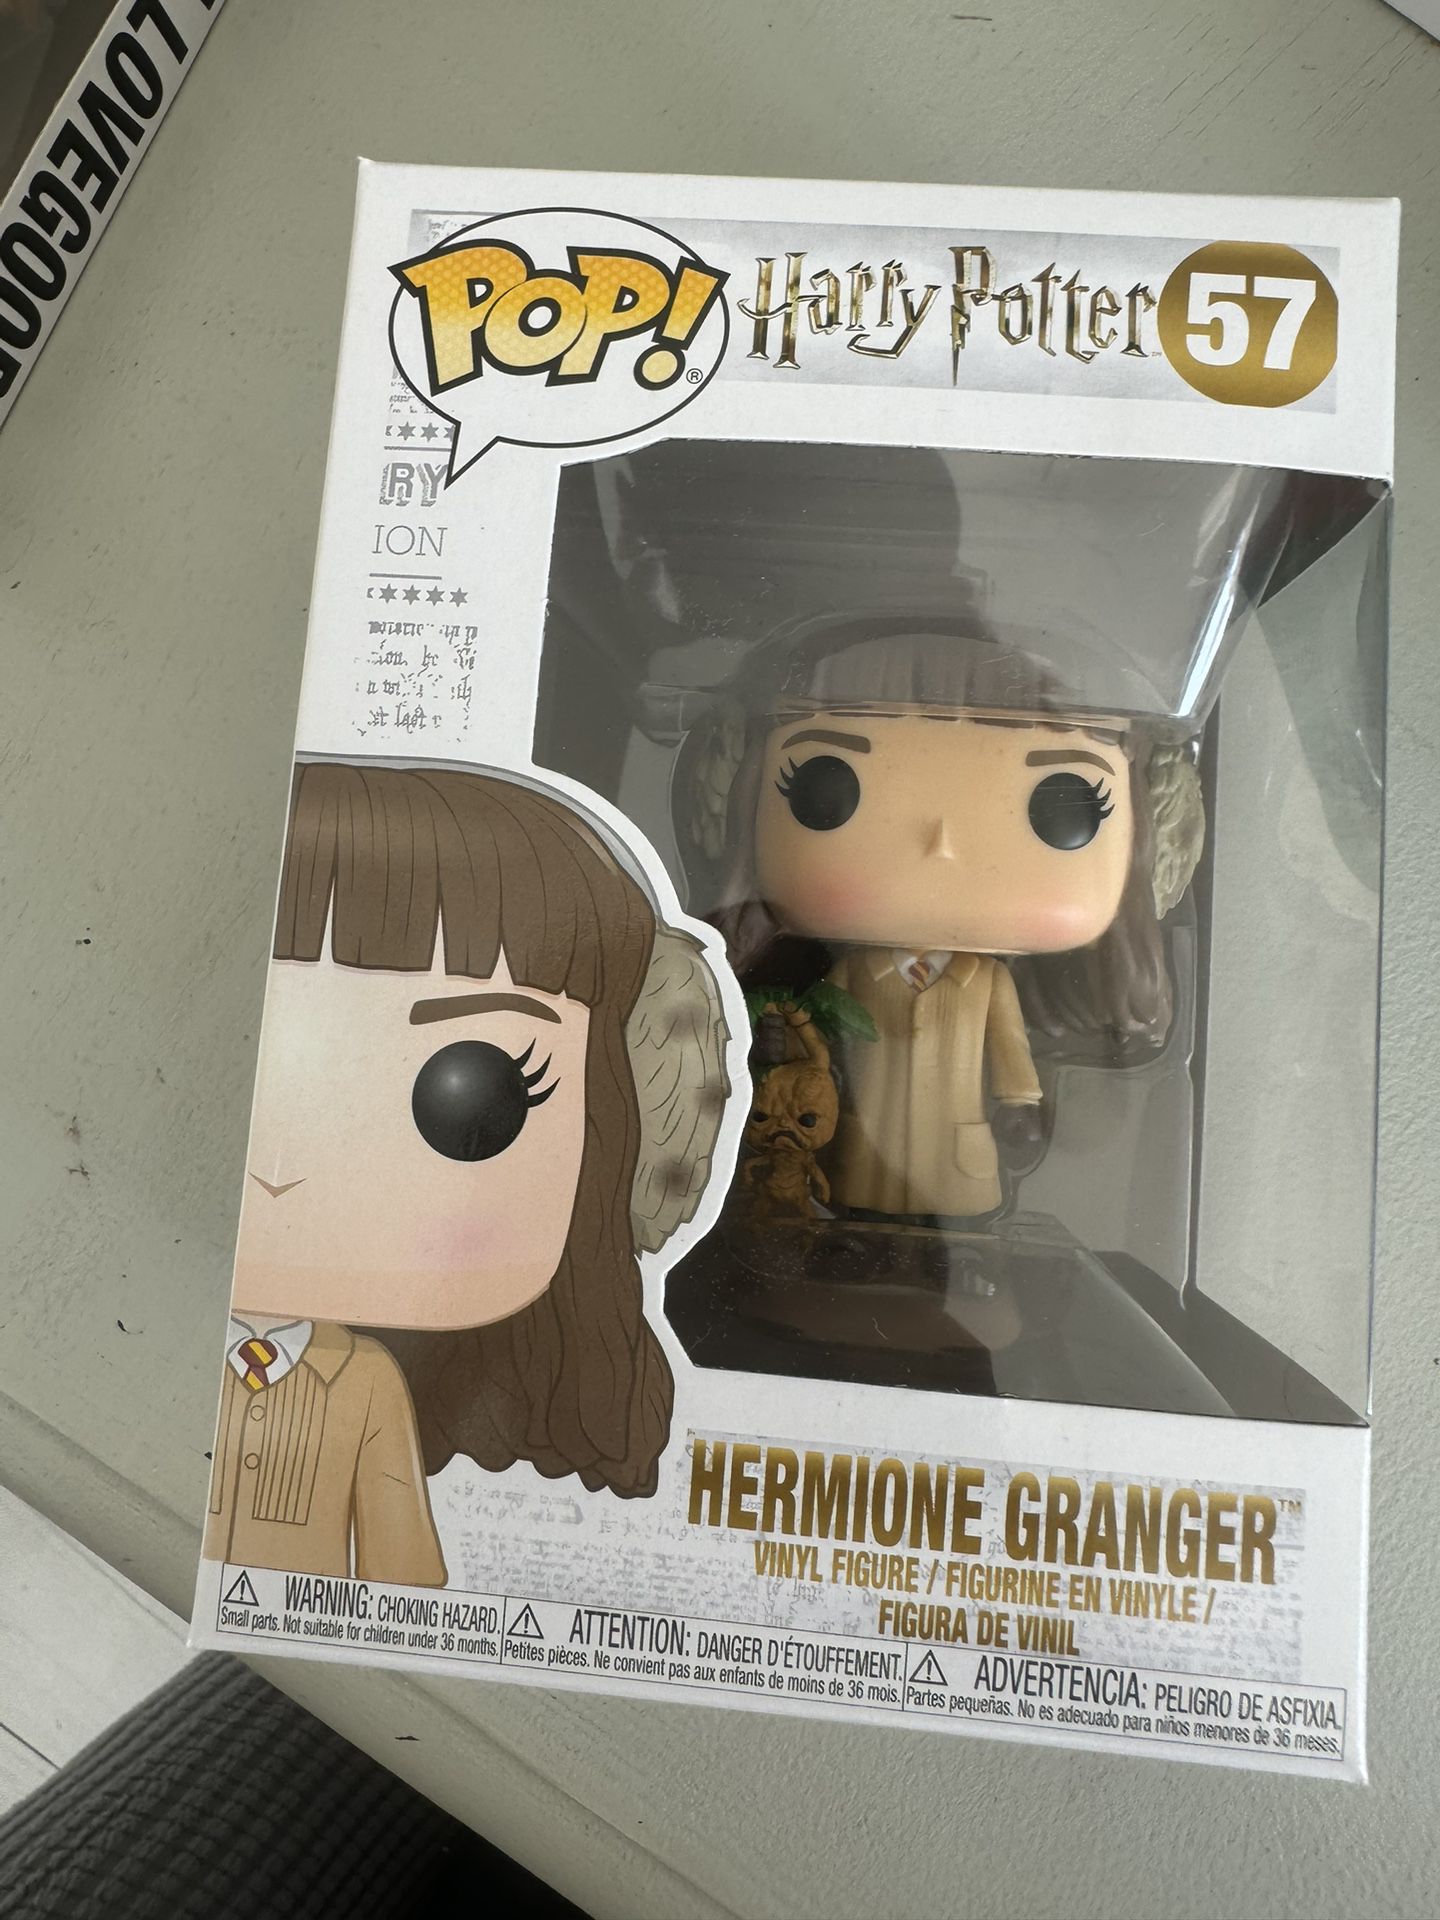 Hermione Granger Mandrake Plant Funko Pop! (Harry Potter)